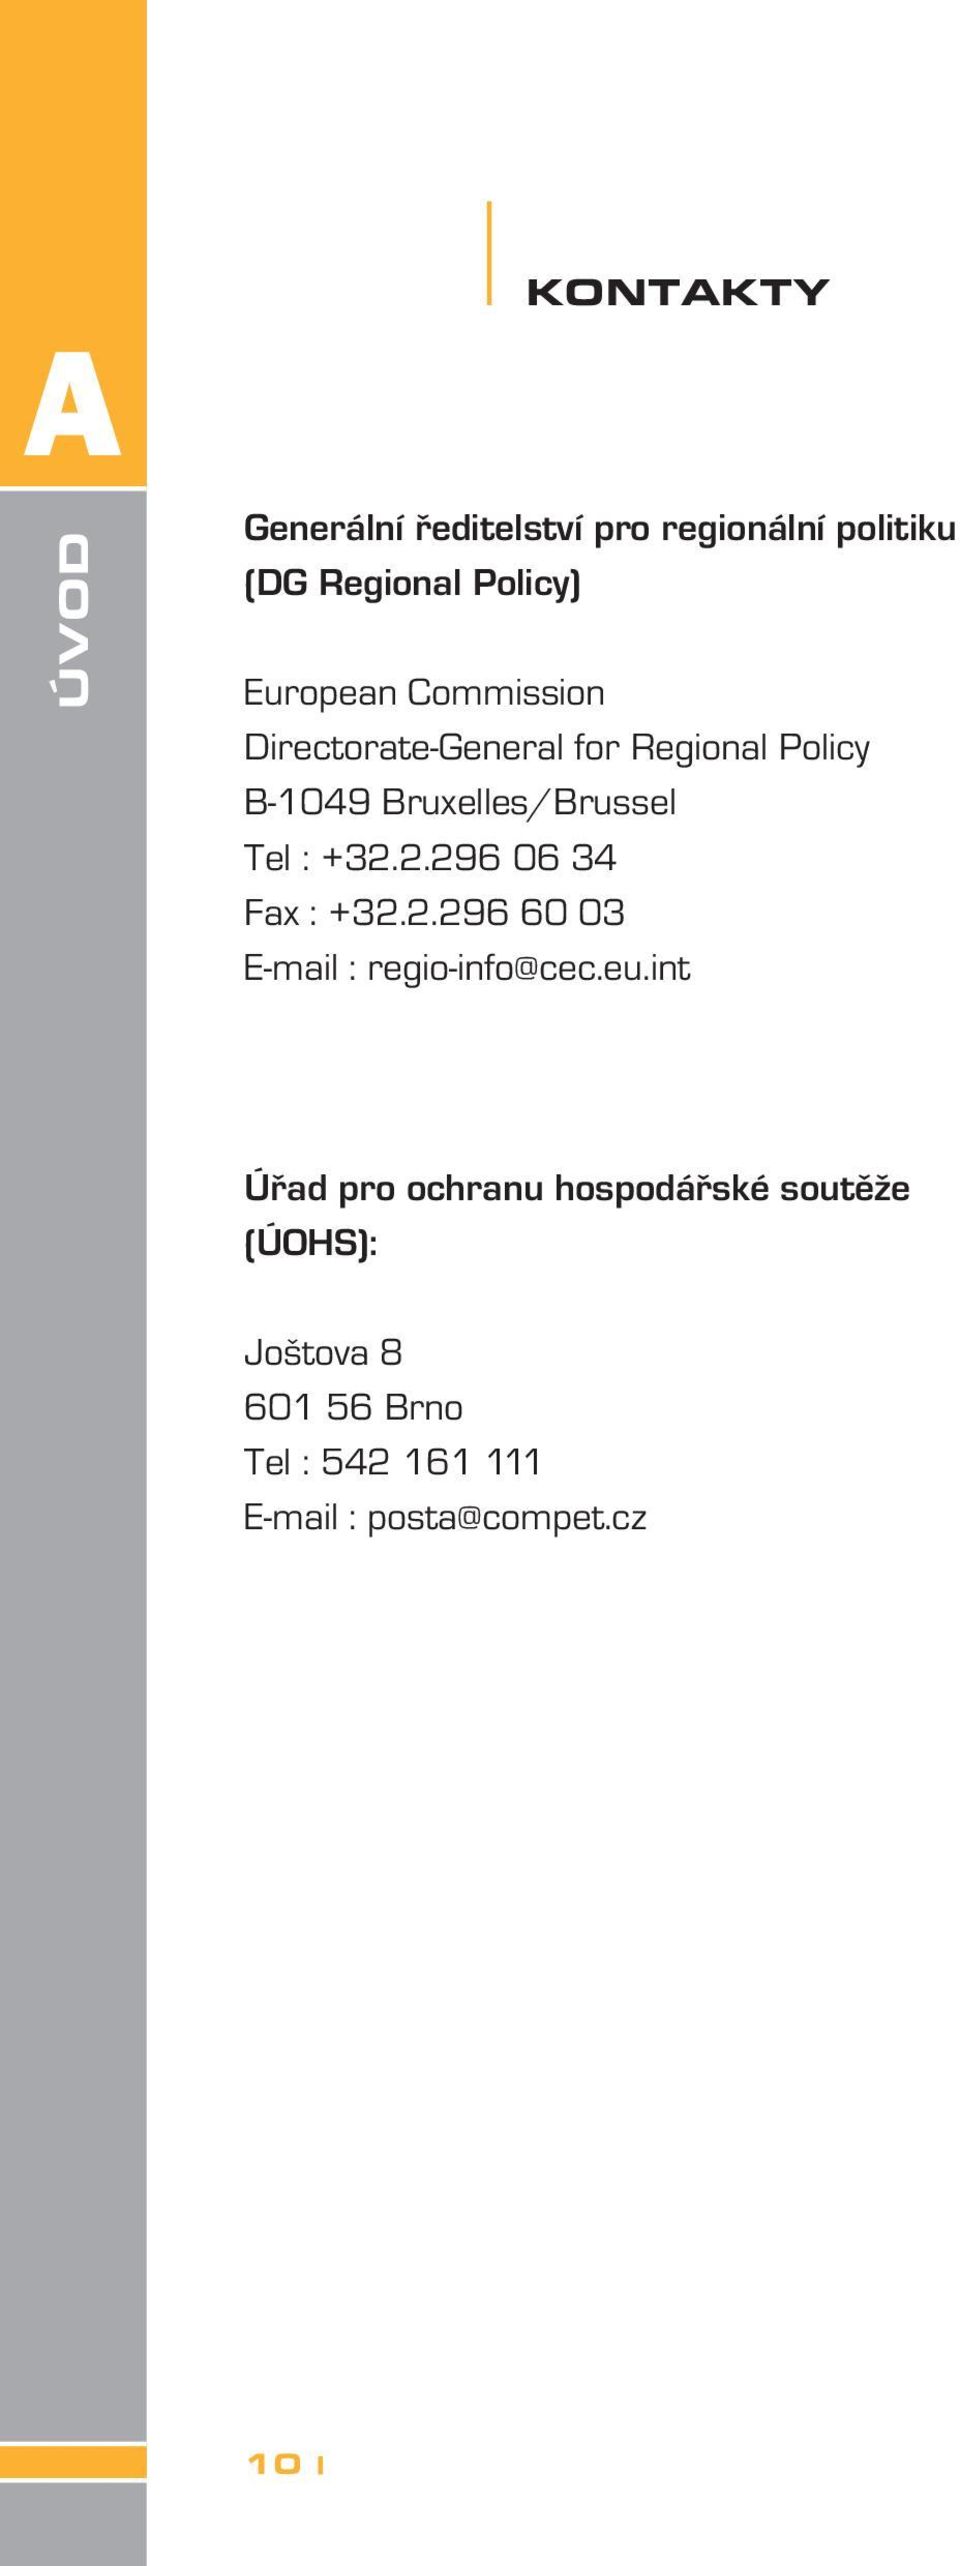 : +32.2.296 06 34 Fax : +32.2.296 60 03 E-mail : regio-info@cec.eu.